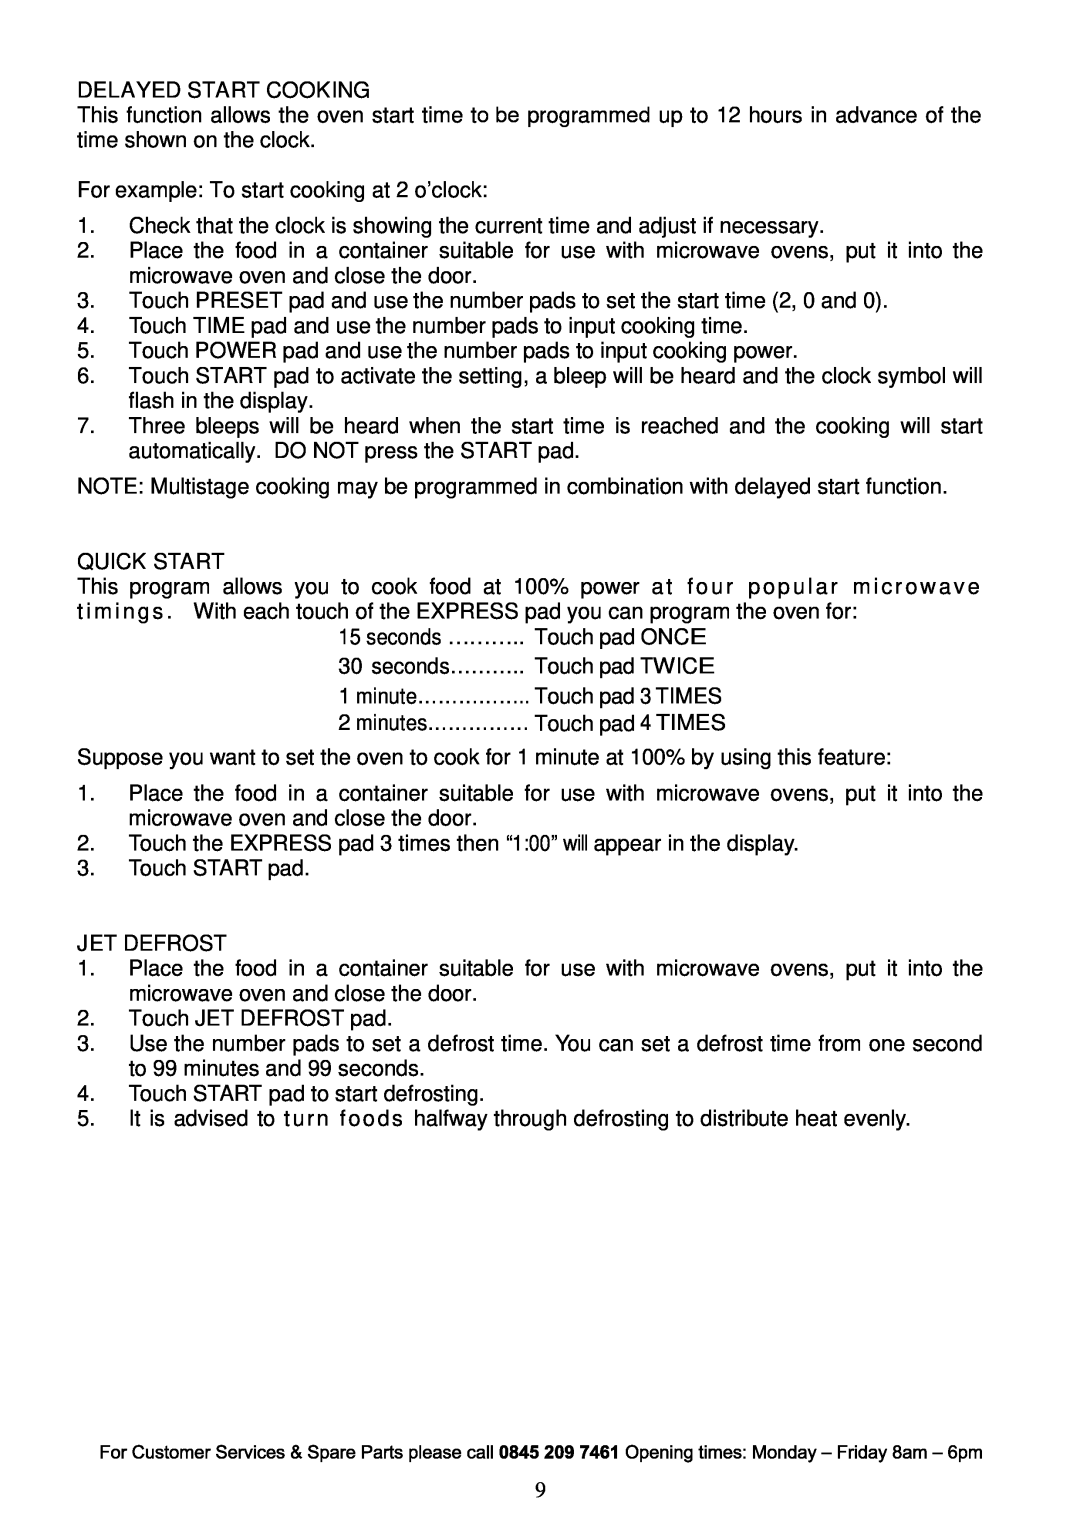 Russell Hobbs RHM1719B manual Delayed Start Cooking, Quick Start, Jet Defrost 